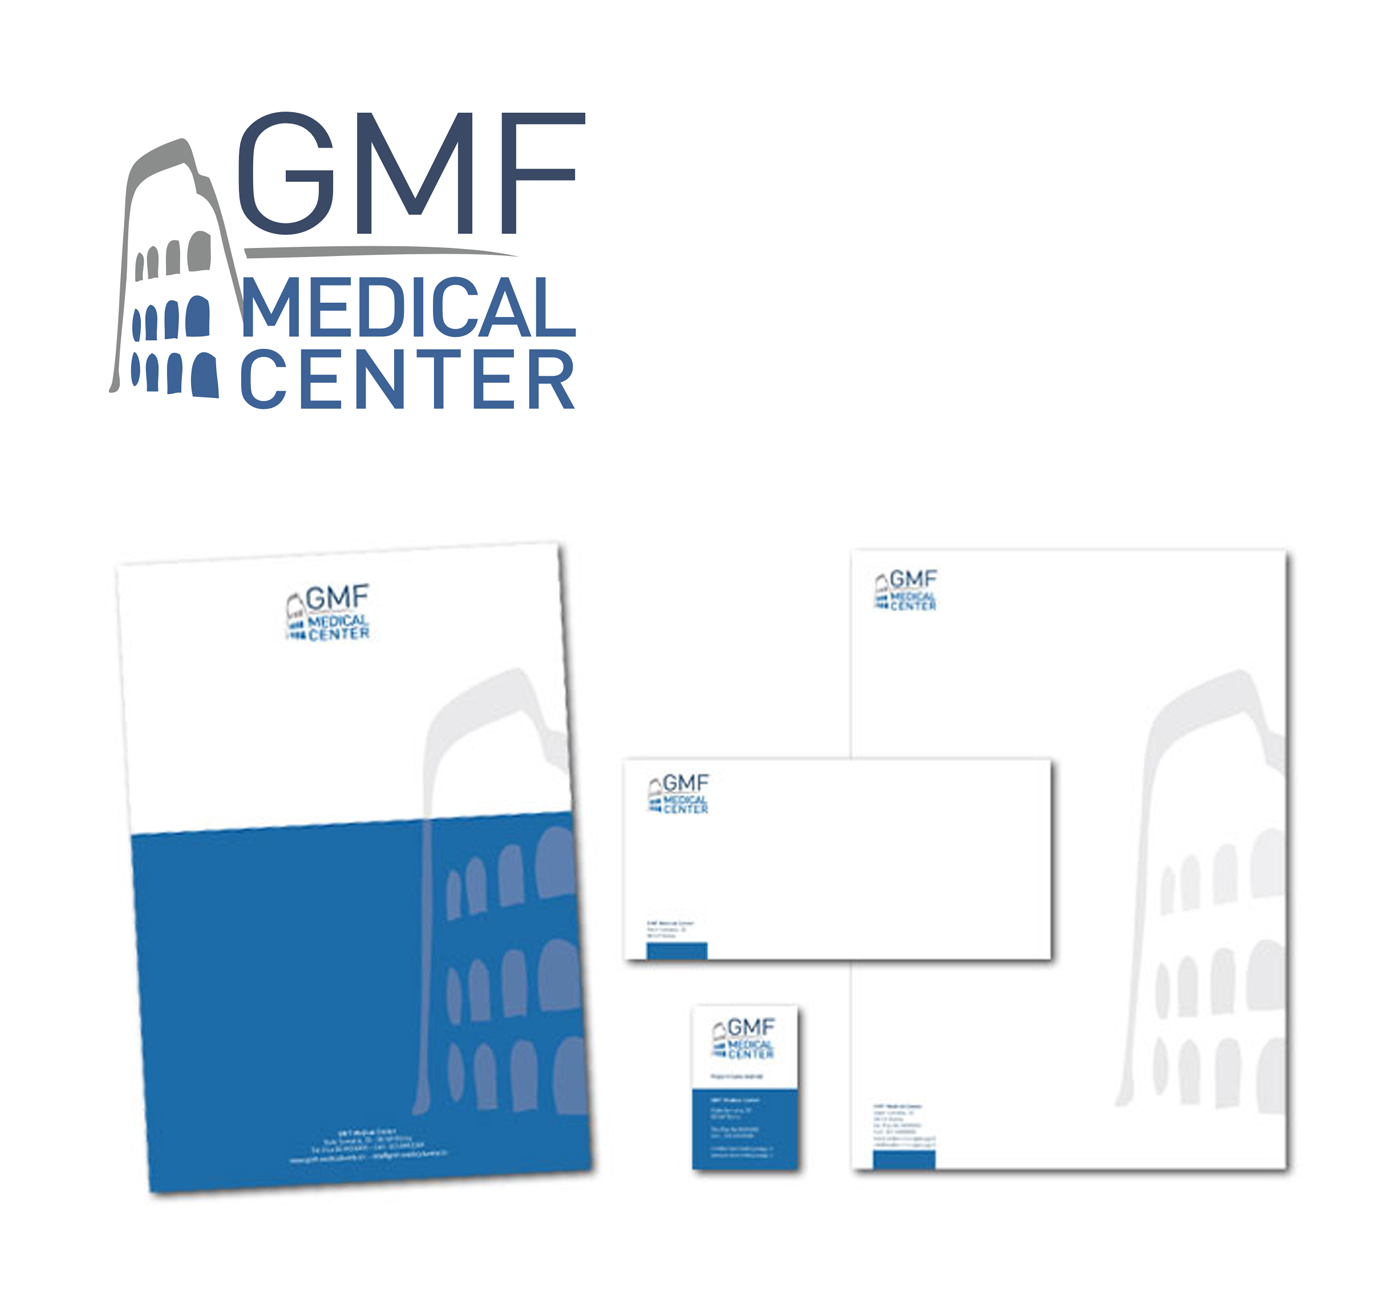 Logo GMF Medical center